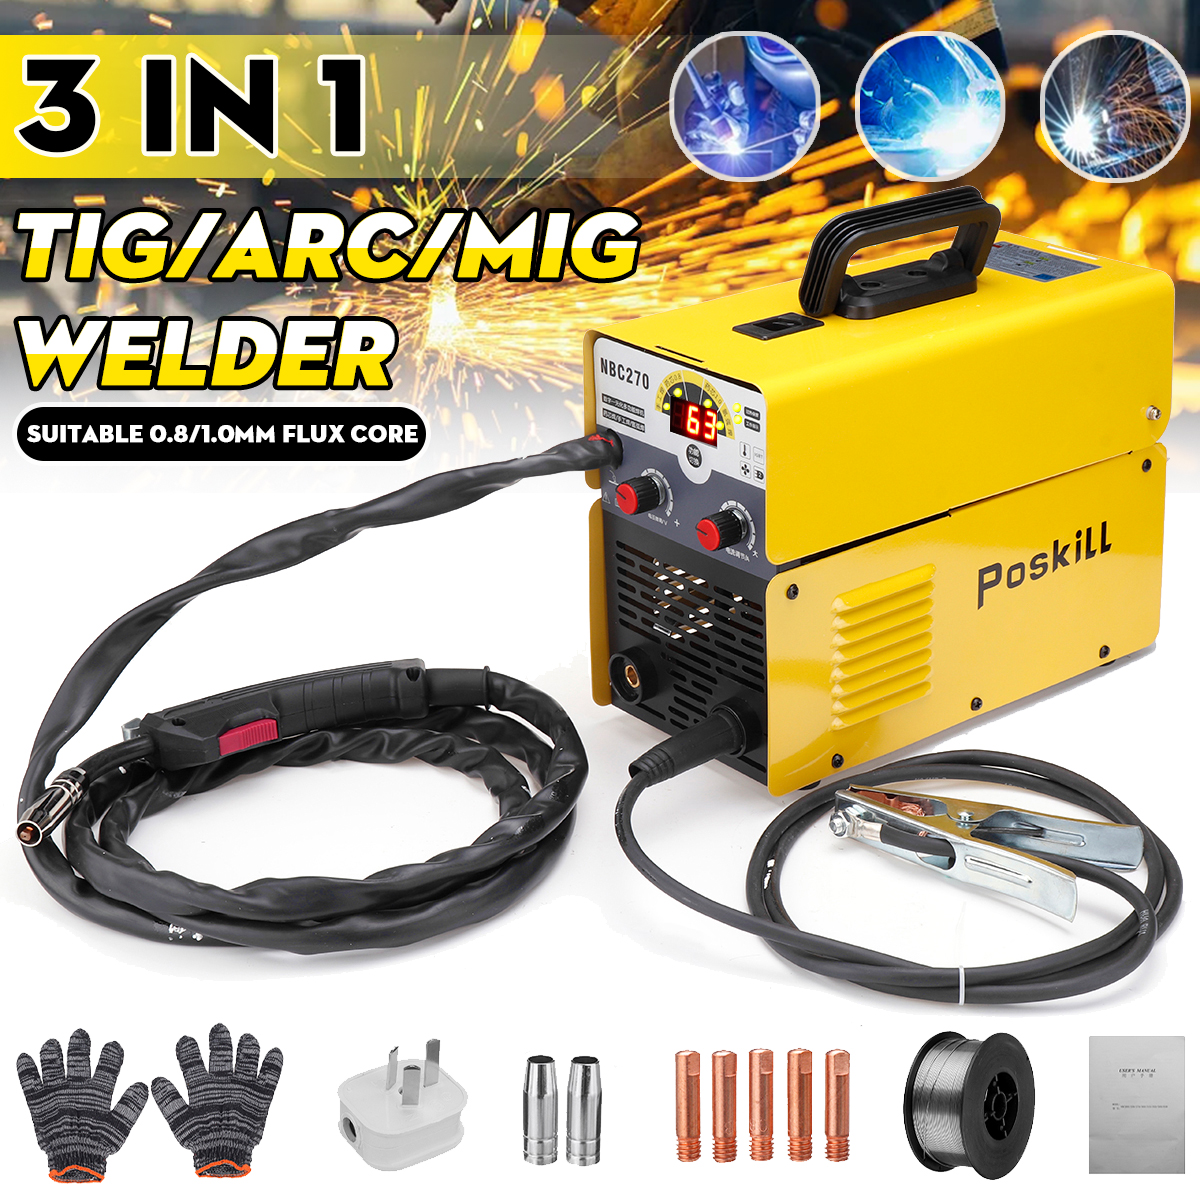 AC-220V-3-in-1-MIGARCTIG-Electric-Welding-Machine-LCD-Digital-Handheld-Welder-Inverter-Tool-1914102-1